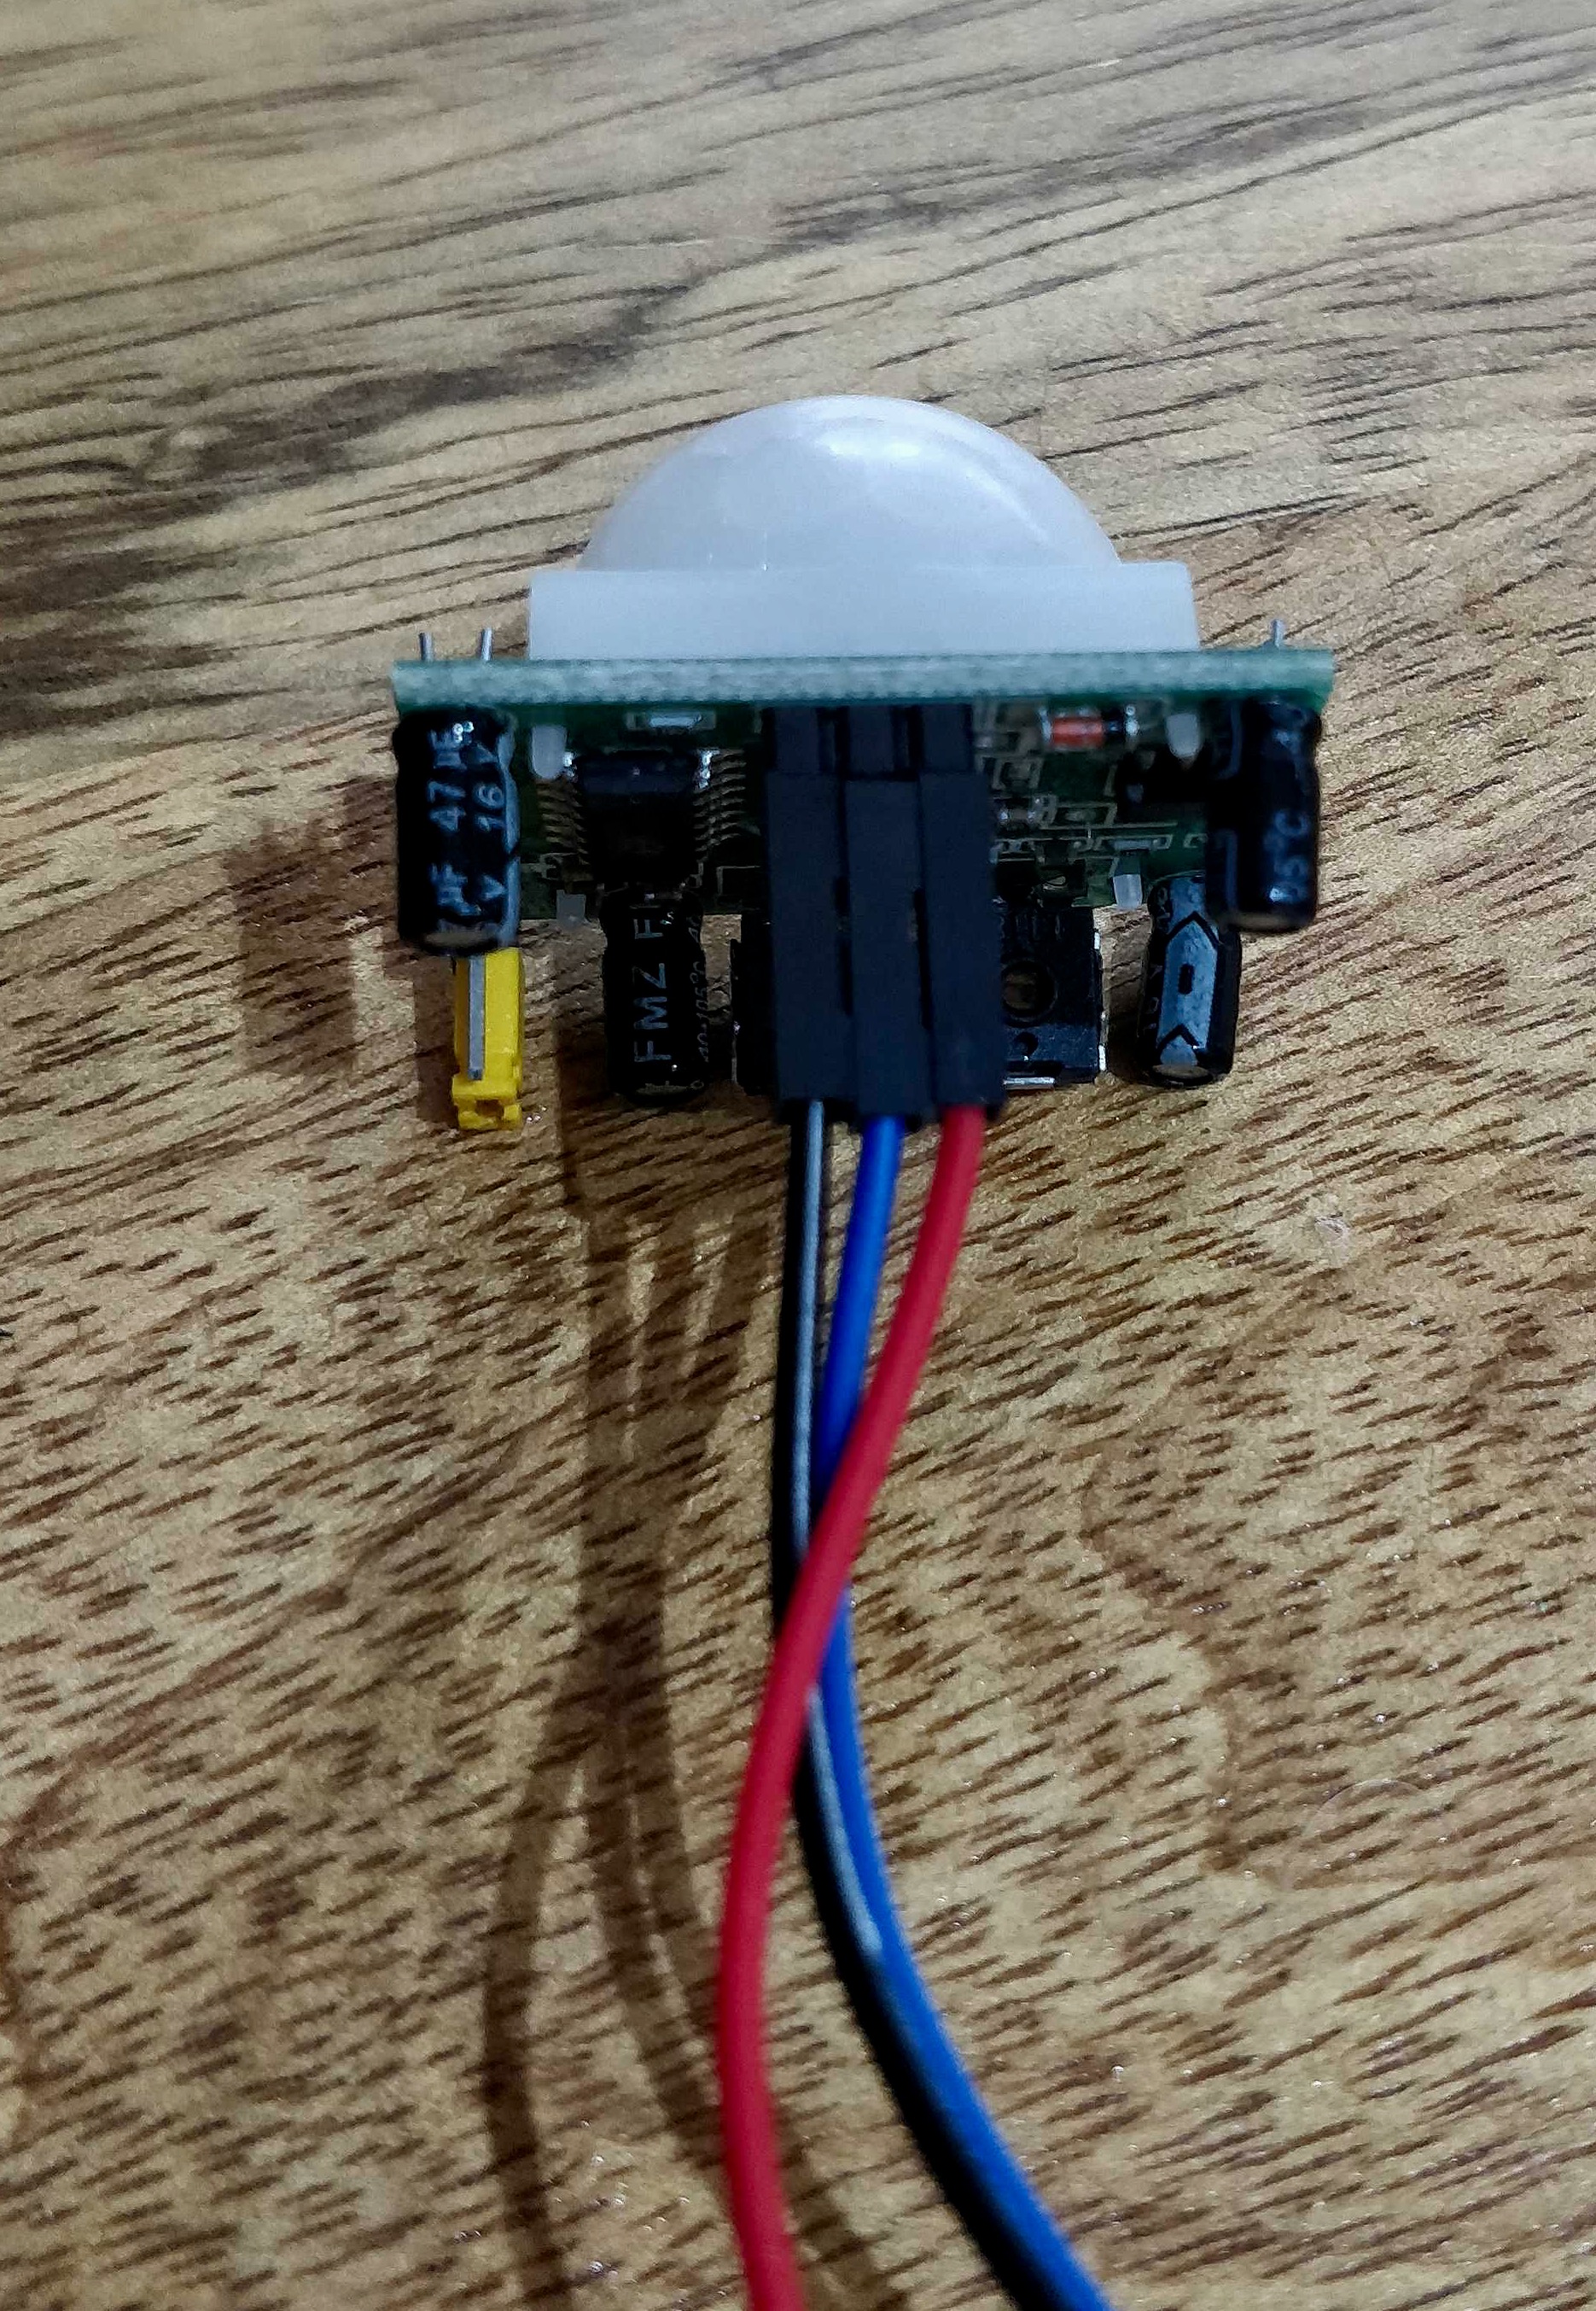 Wiring Sensor to Raspberry Pi Pt1